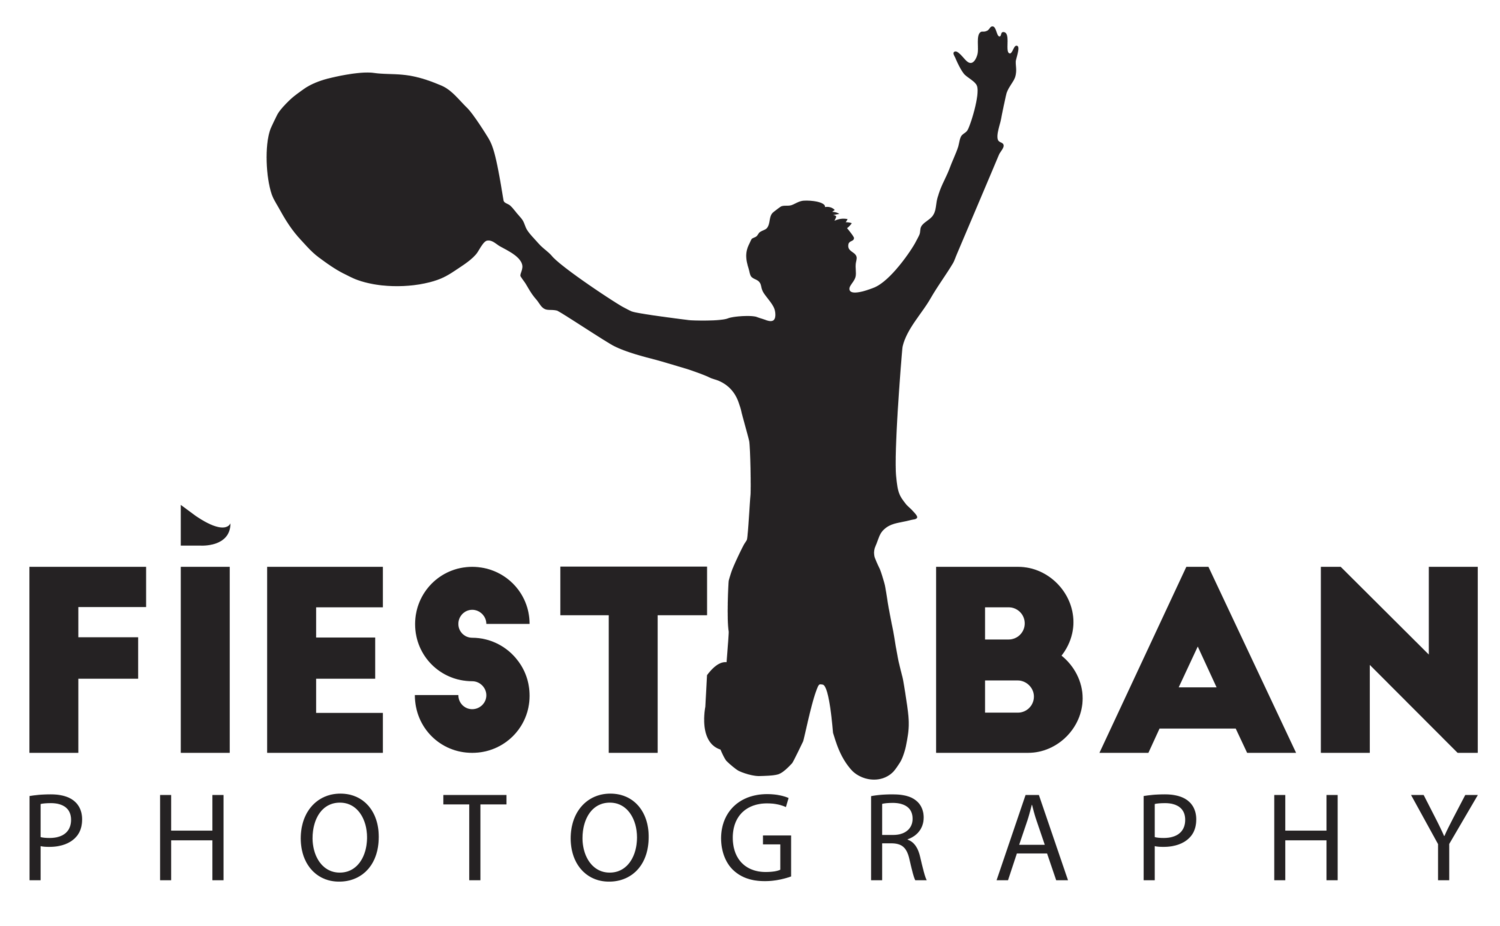 Fiestaban Photography